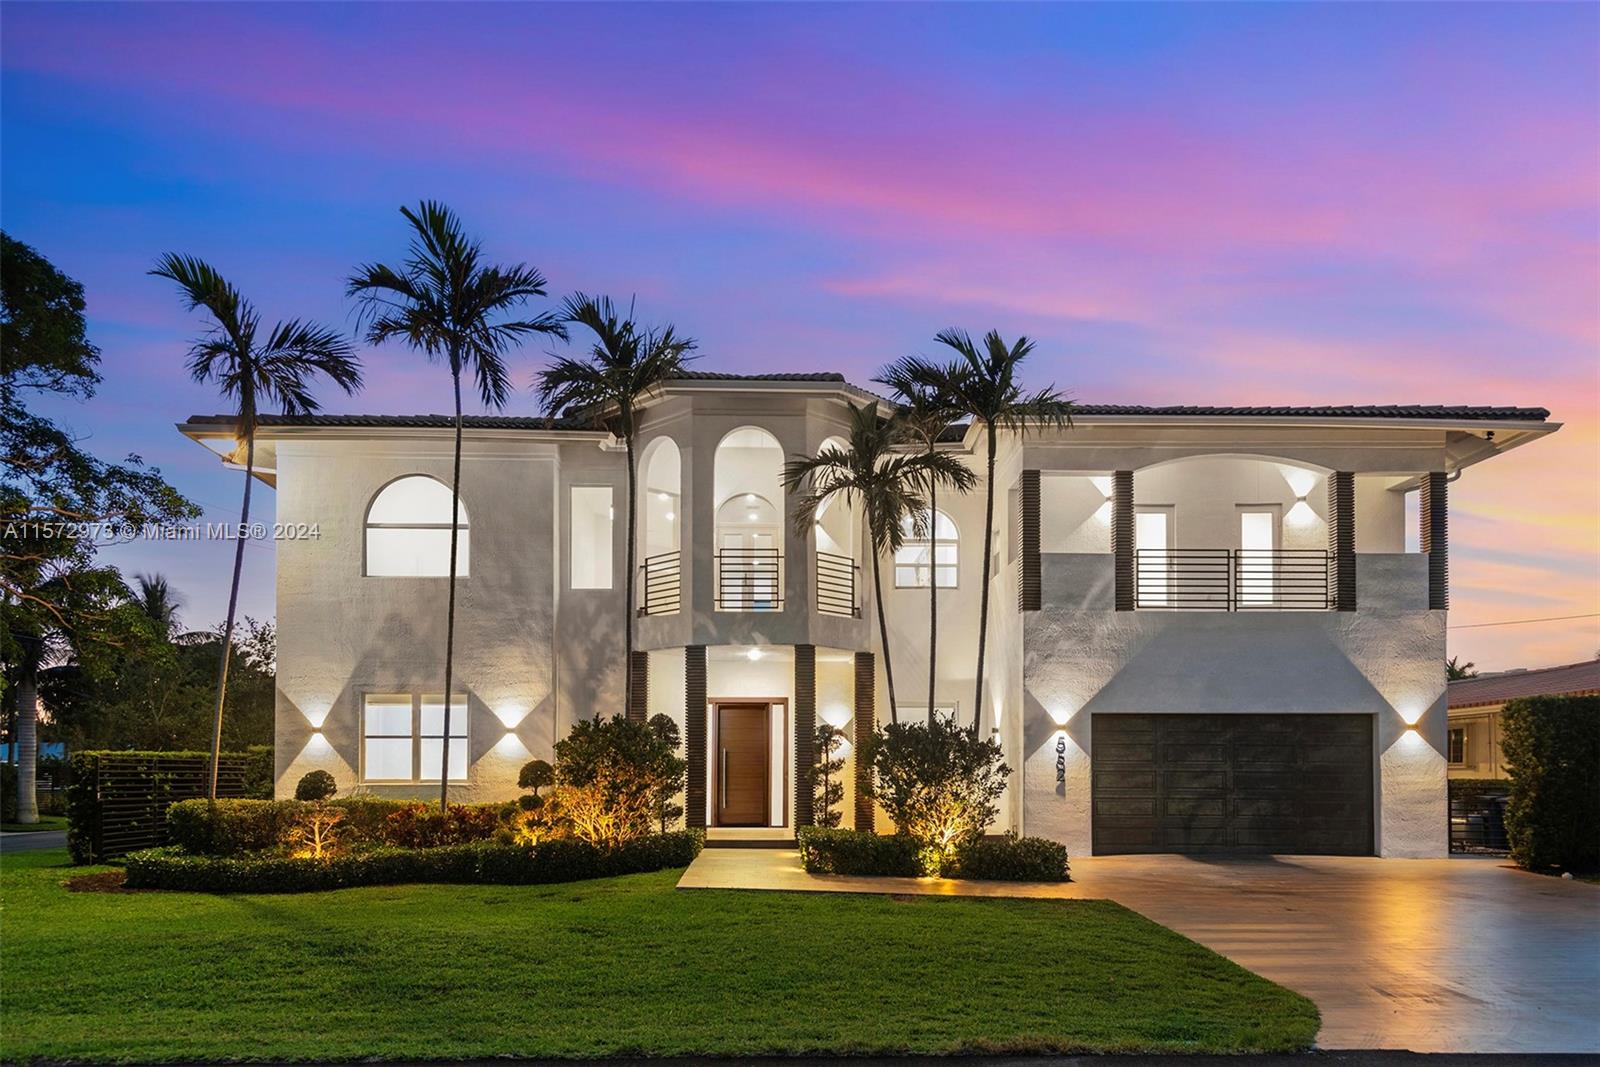 Rental Property at 552 Palm Drive, Hallandale Beach, Broward County, Florida - Bedrooms: 7 
Bathrooms: 5  - $24,000 MO.